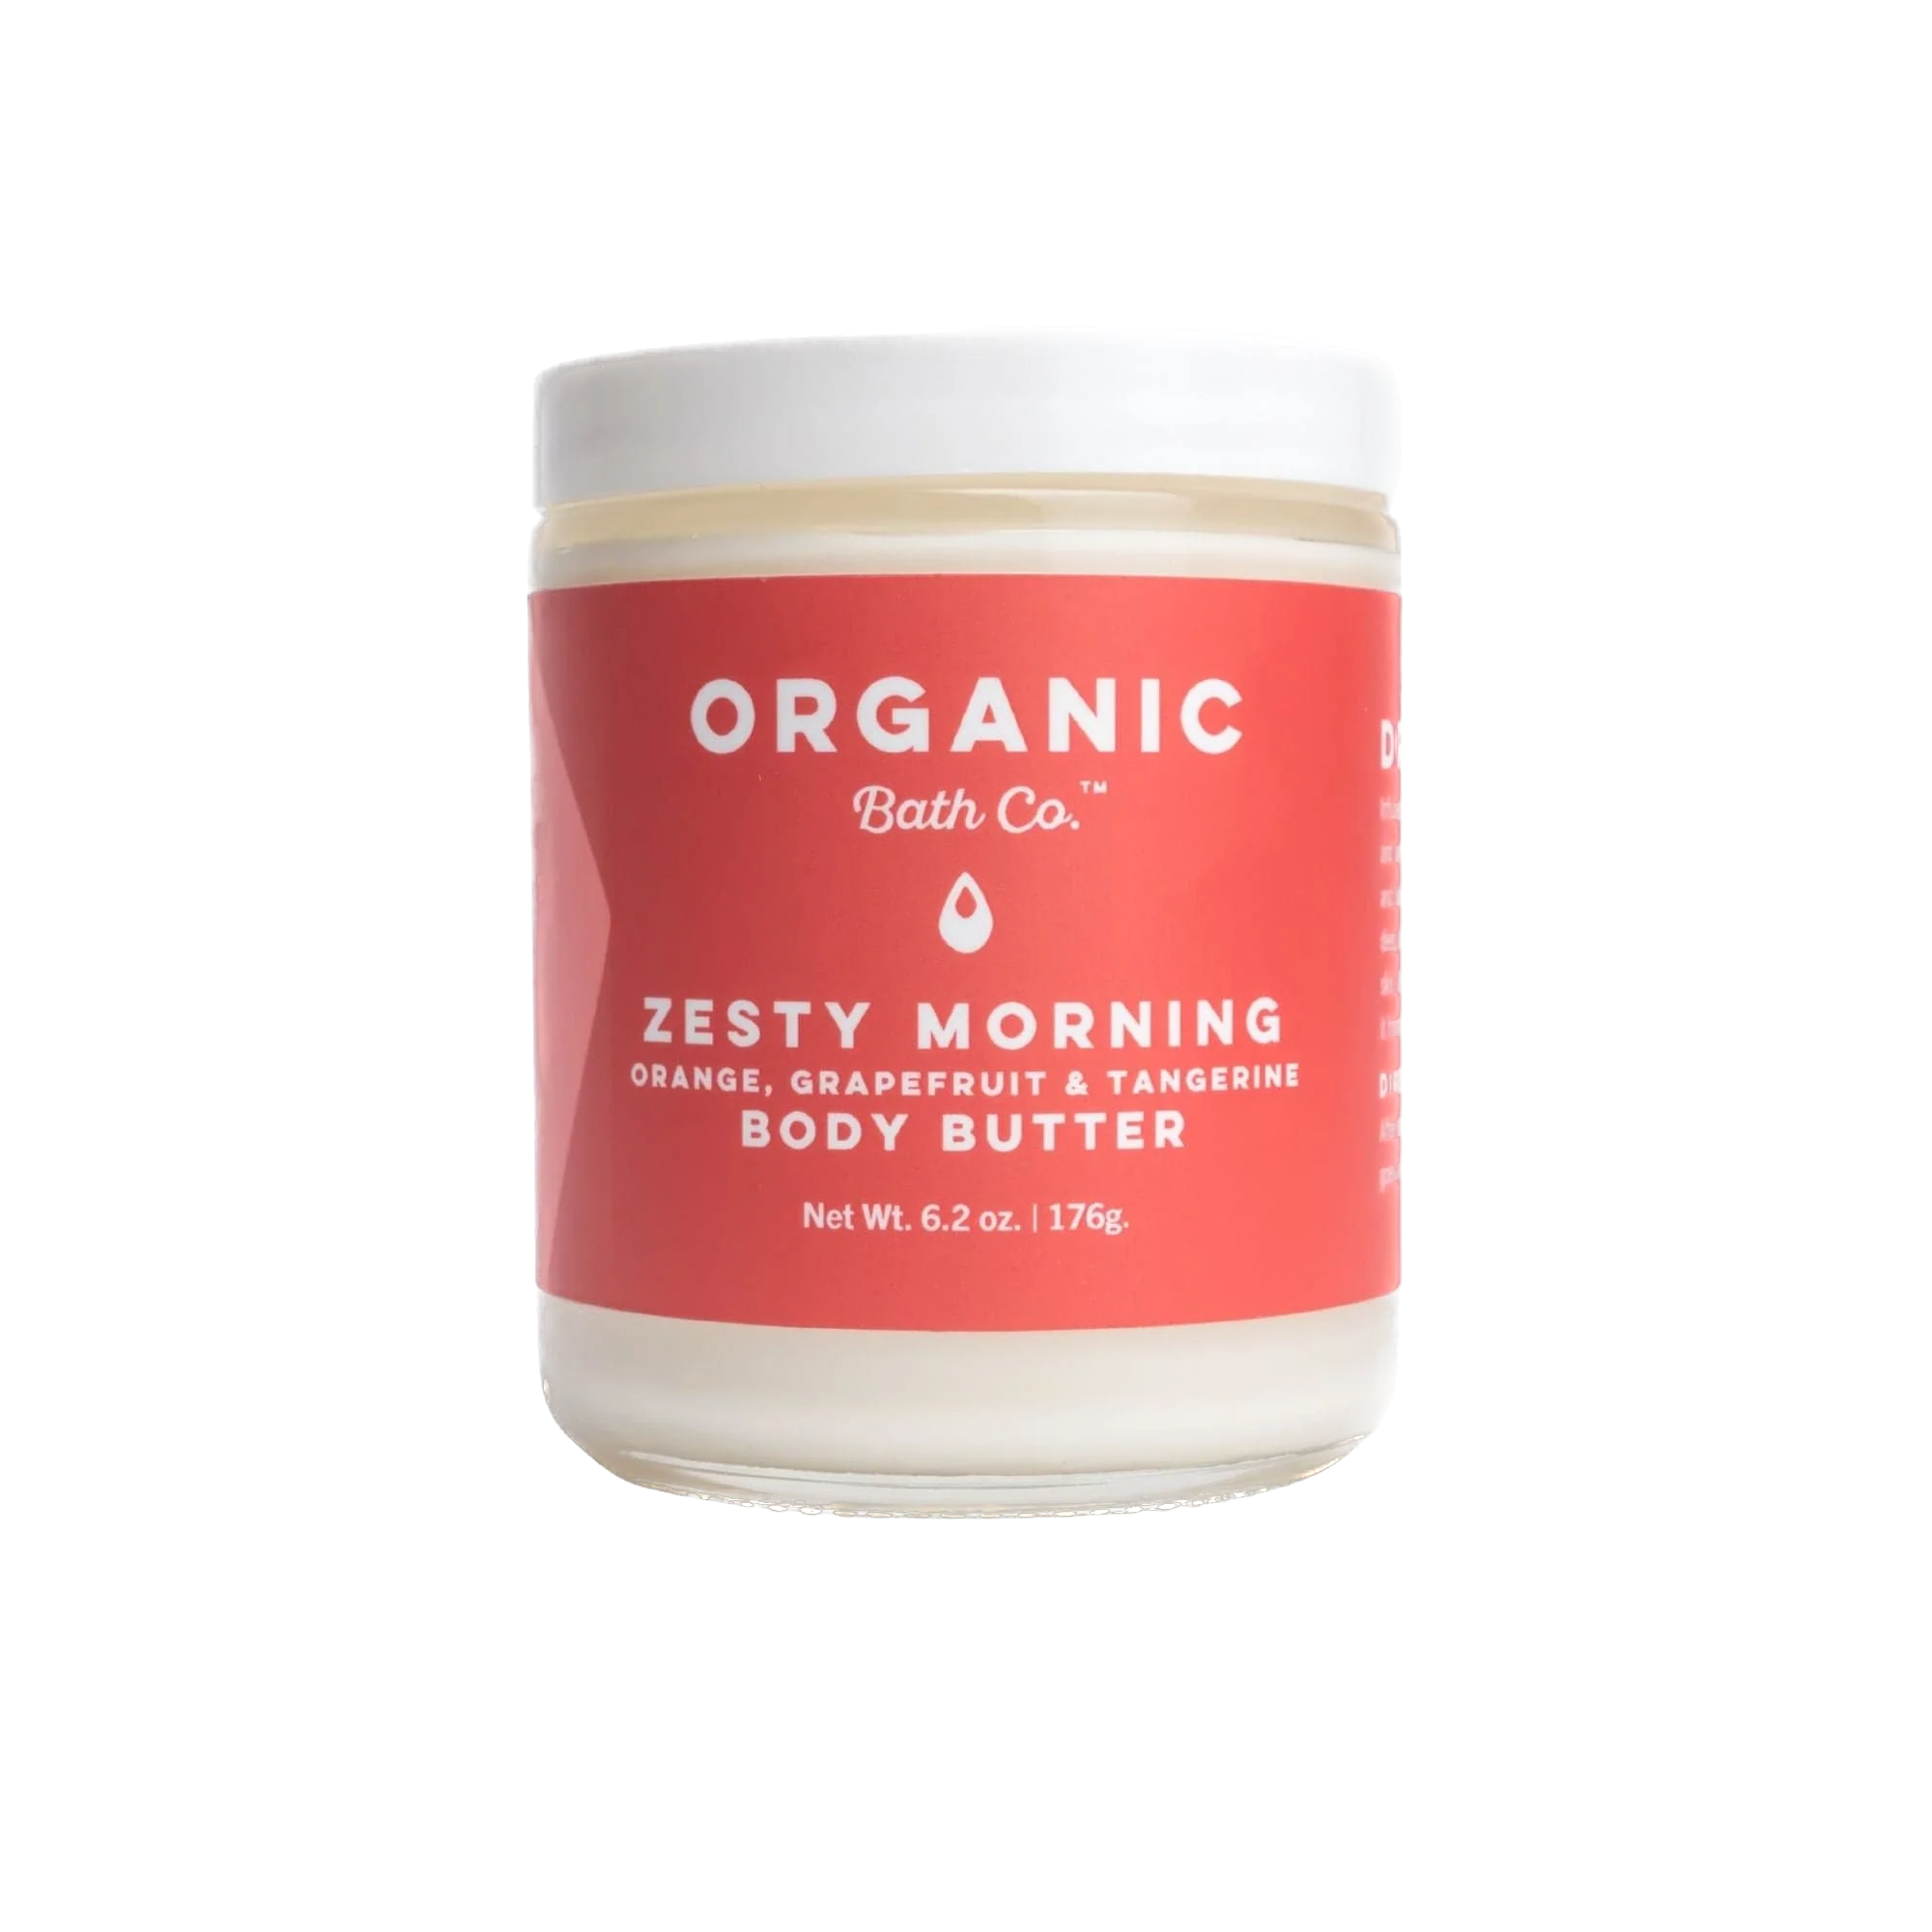 Organic Bath Co. Zesty Morning Organic Body Butter